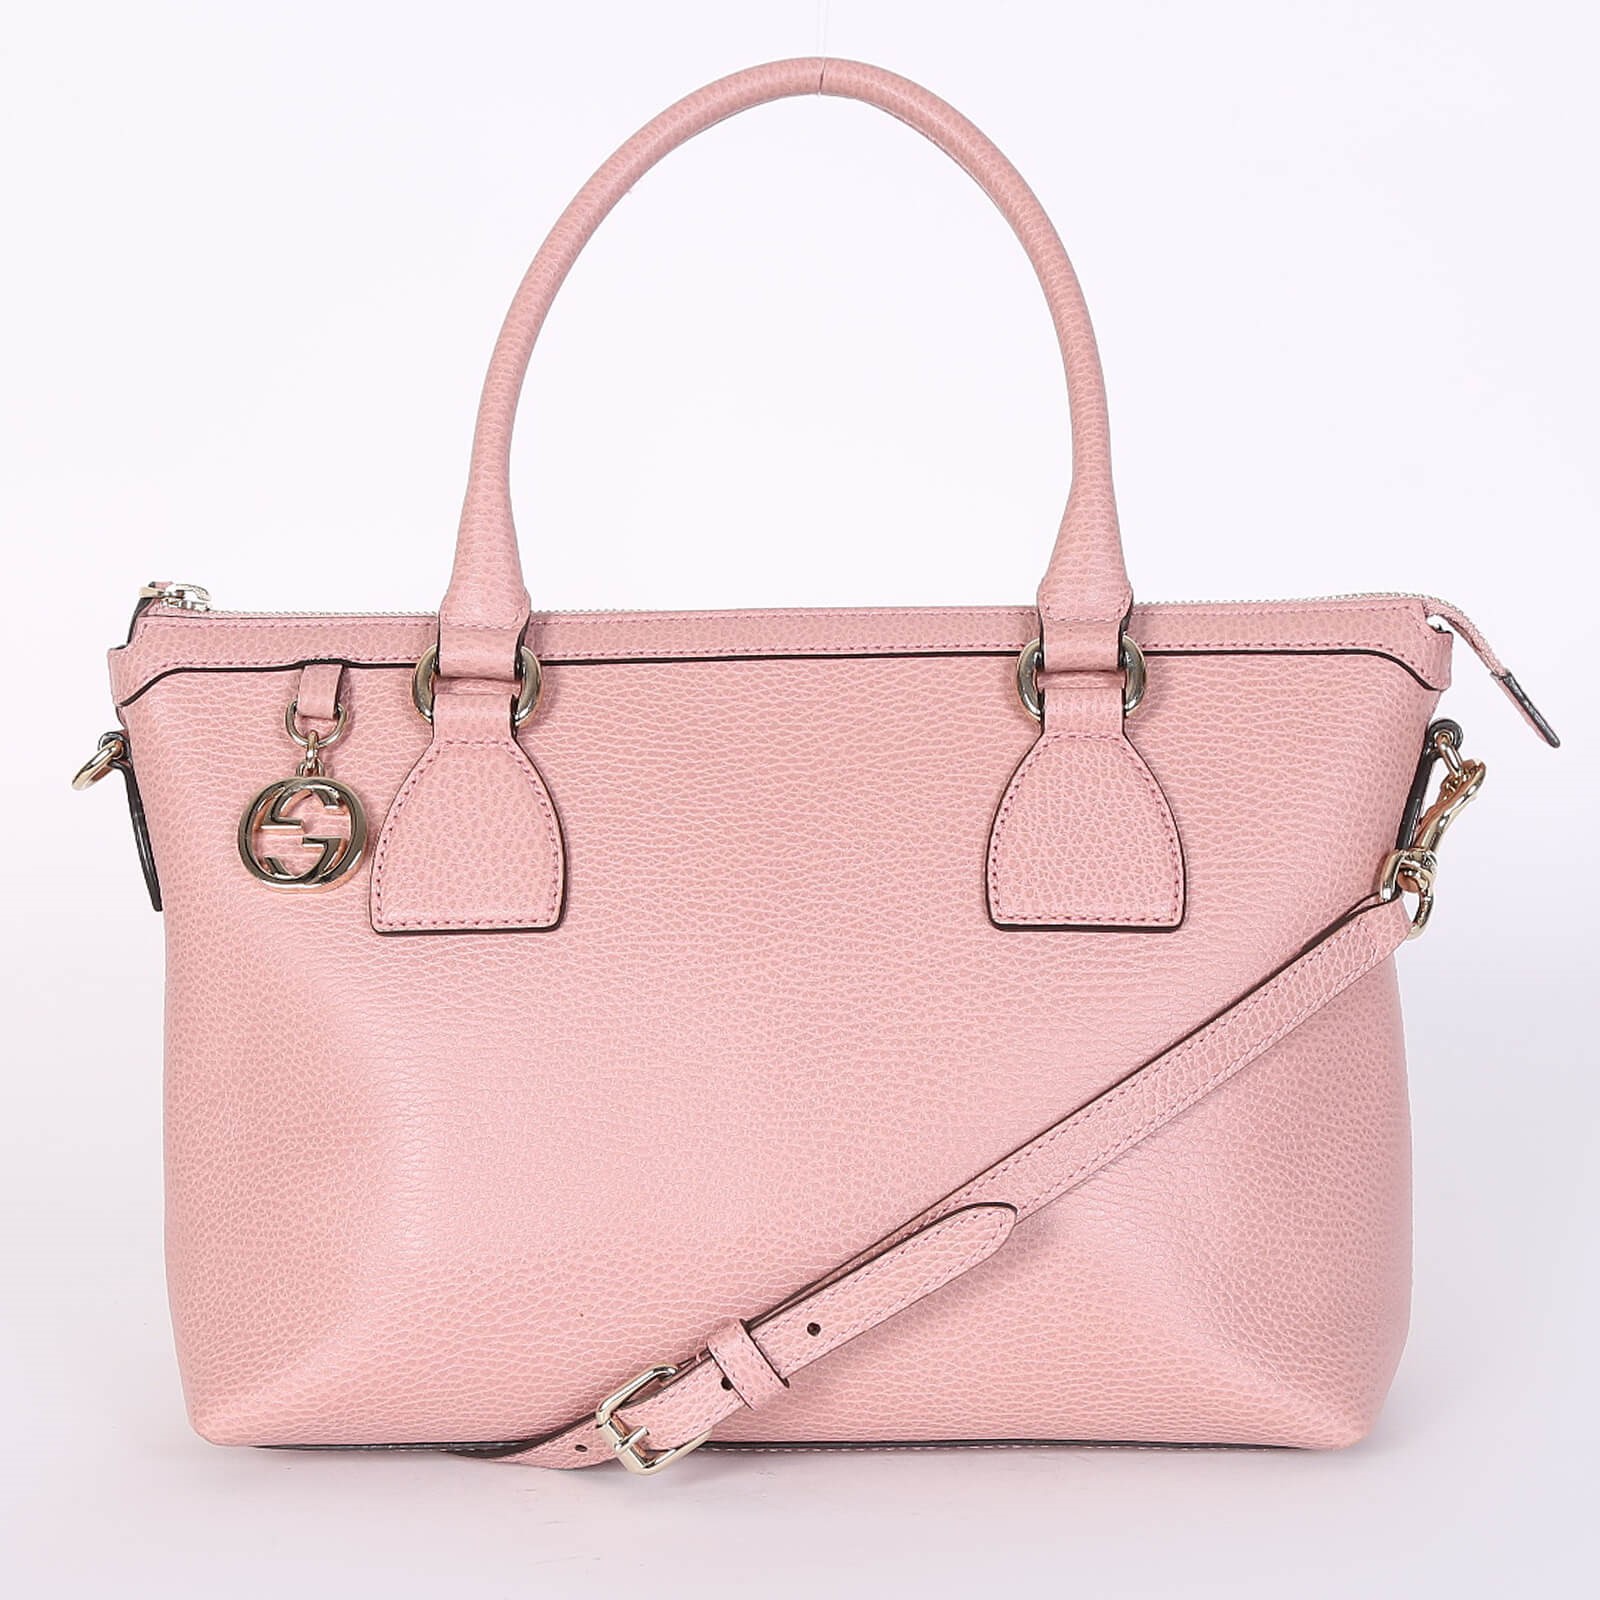 Gucci Pink Dollar Bag : Luxury Reveal